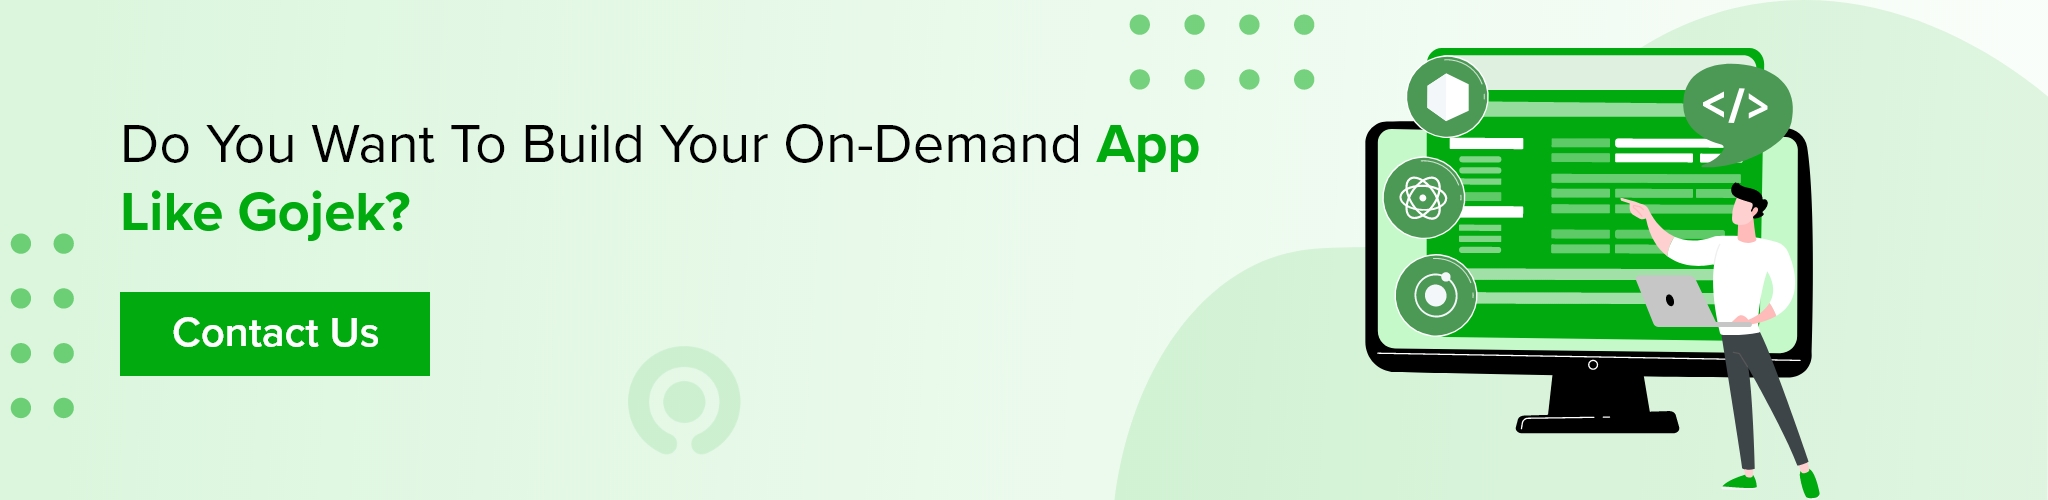 build your on demand app like gojek